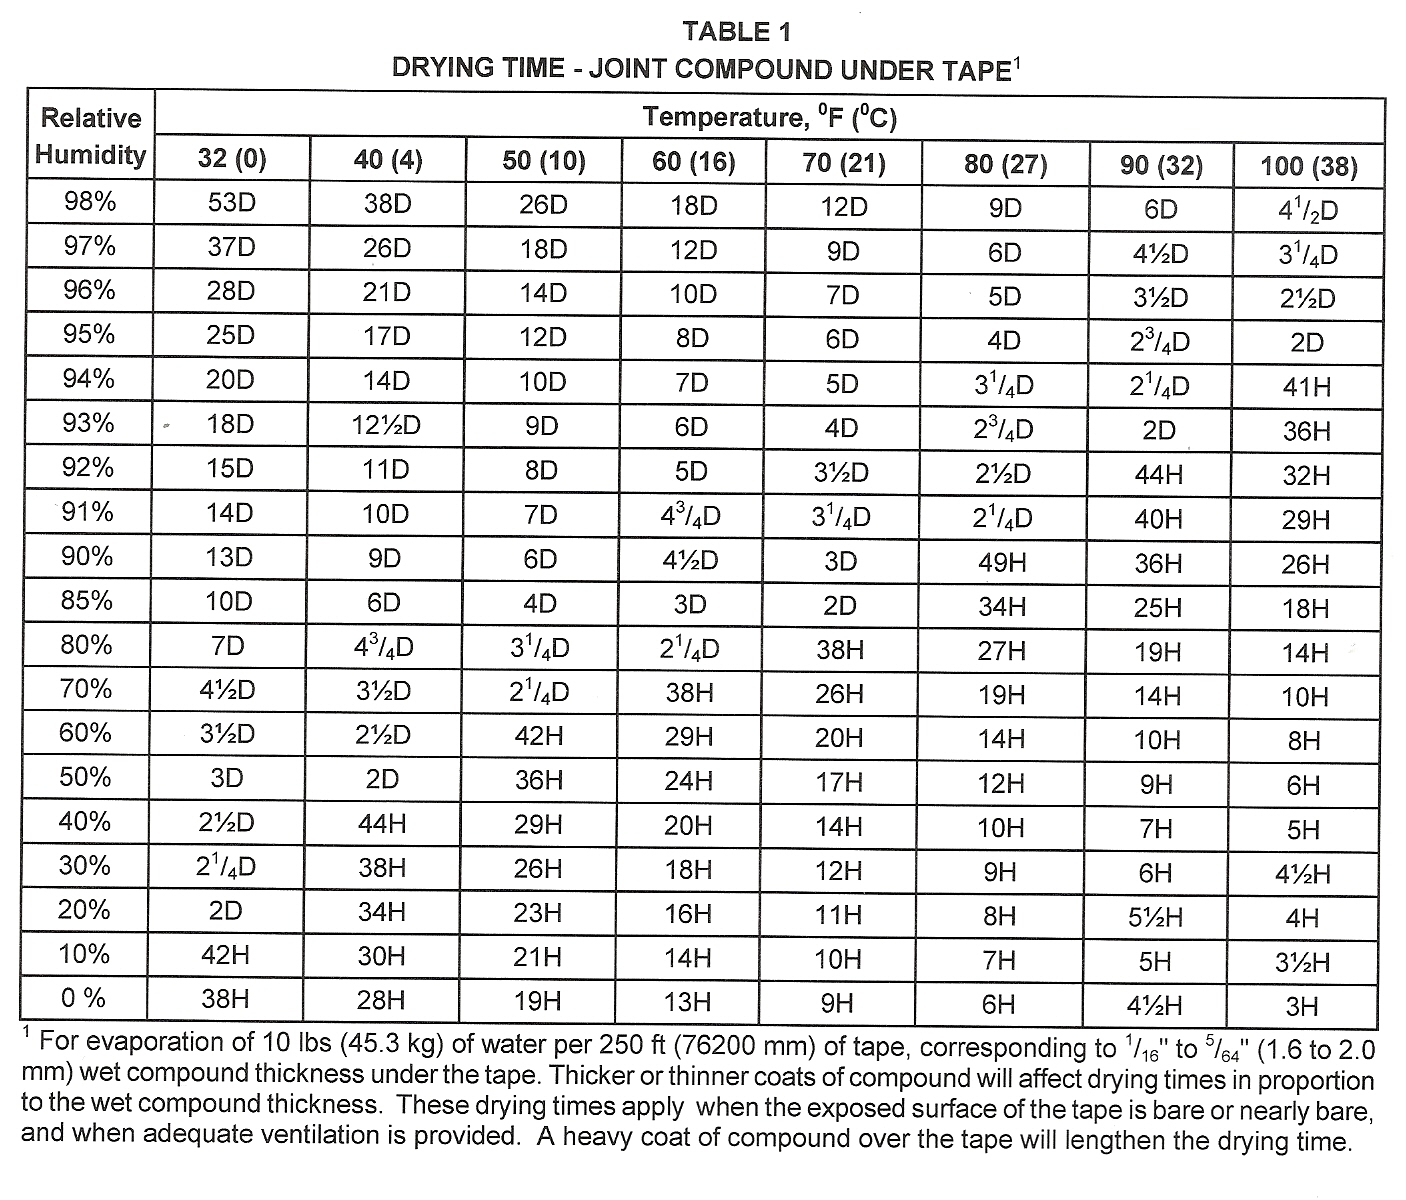 wood drying time chart - Part.tscoreks.org